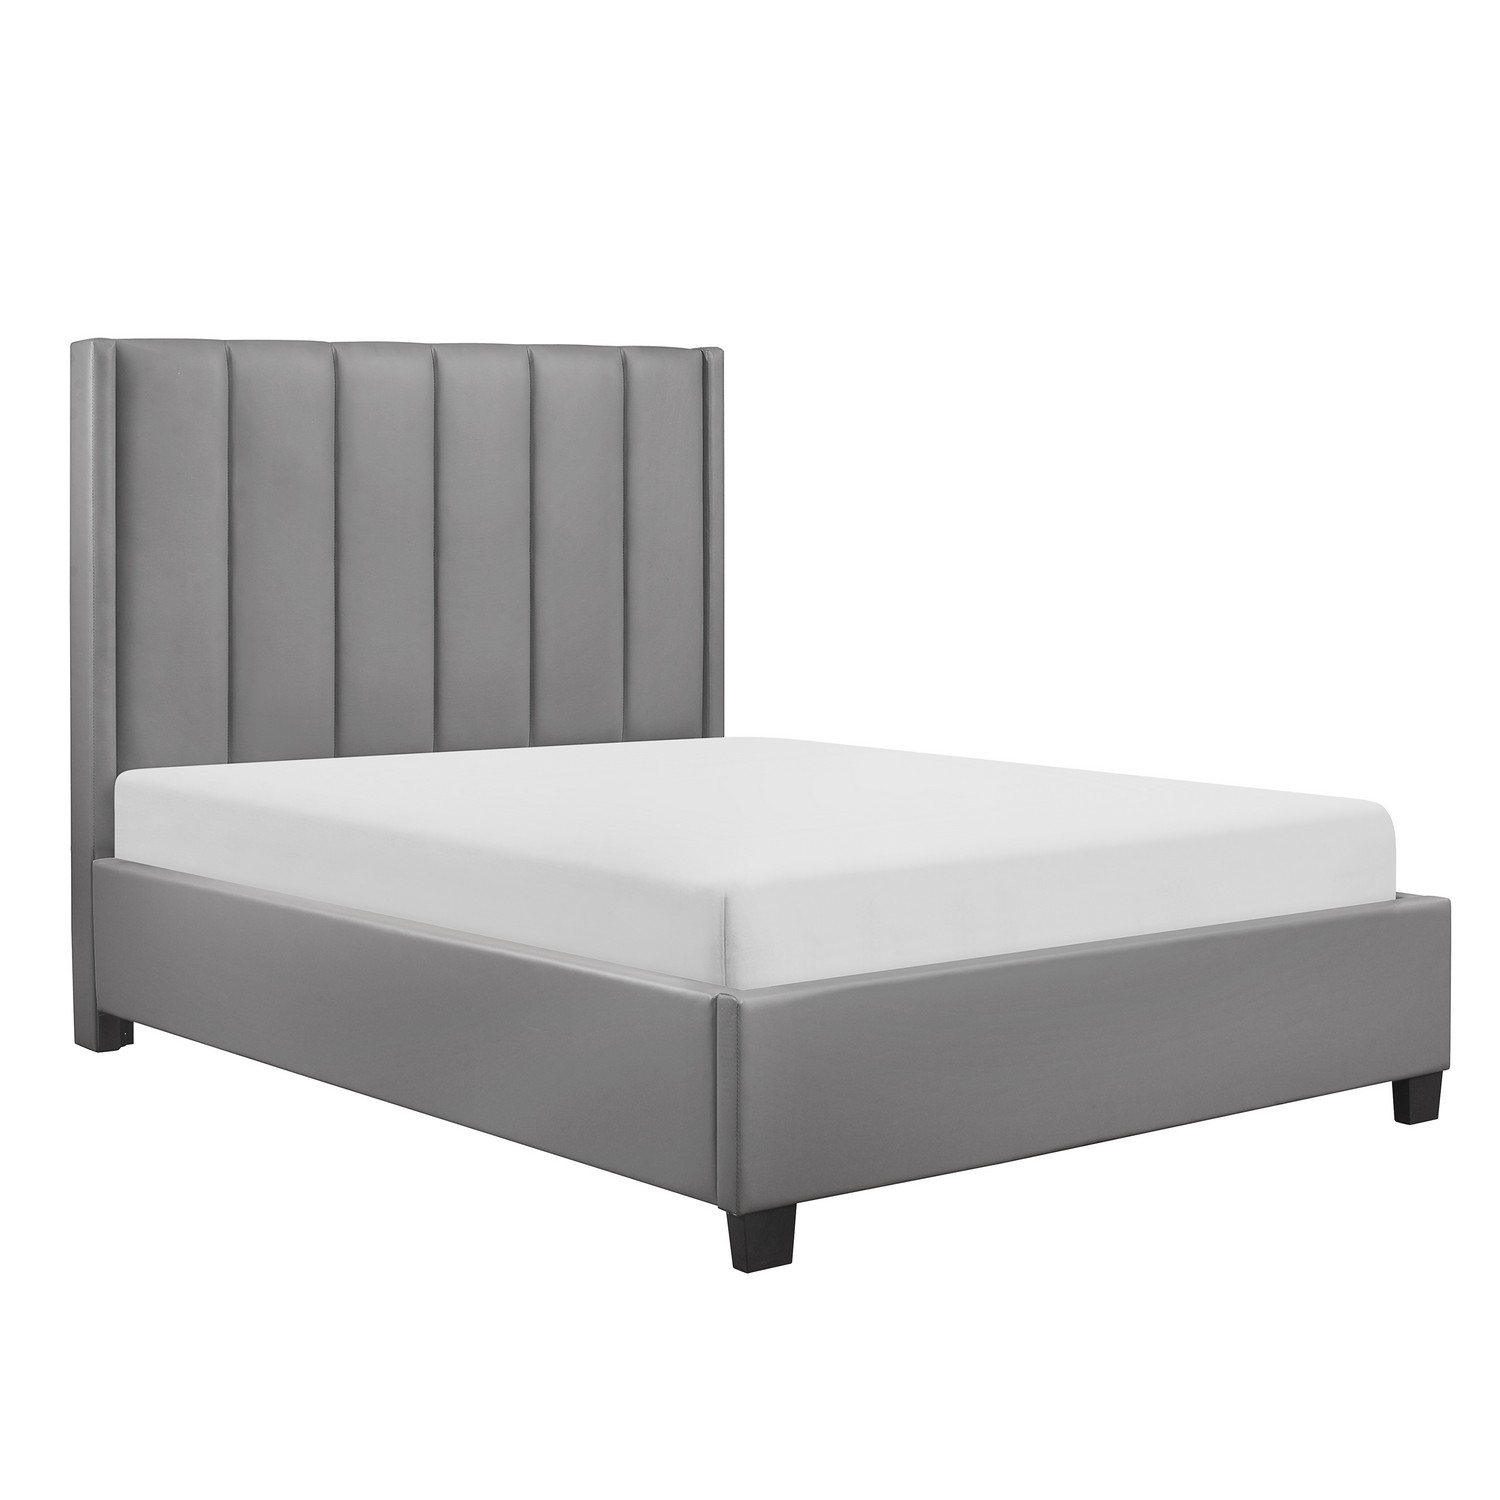 Homelegance Anson Channel Tufted Platform Bed - Neutral Gray